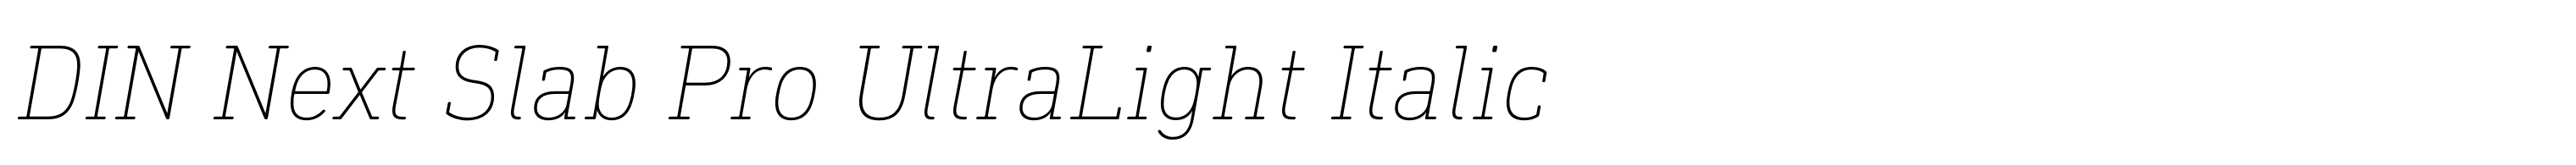 DIN Next Slab Pro UltraLight Italic